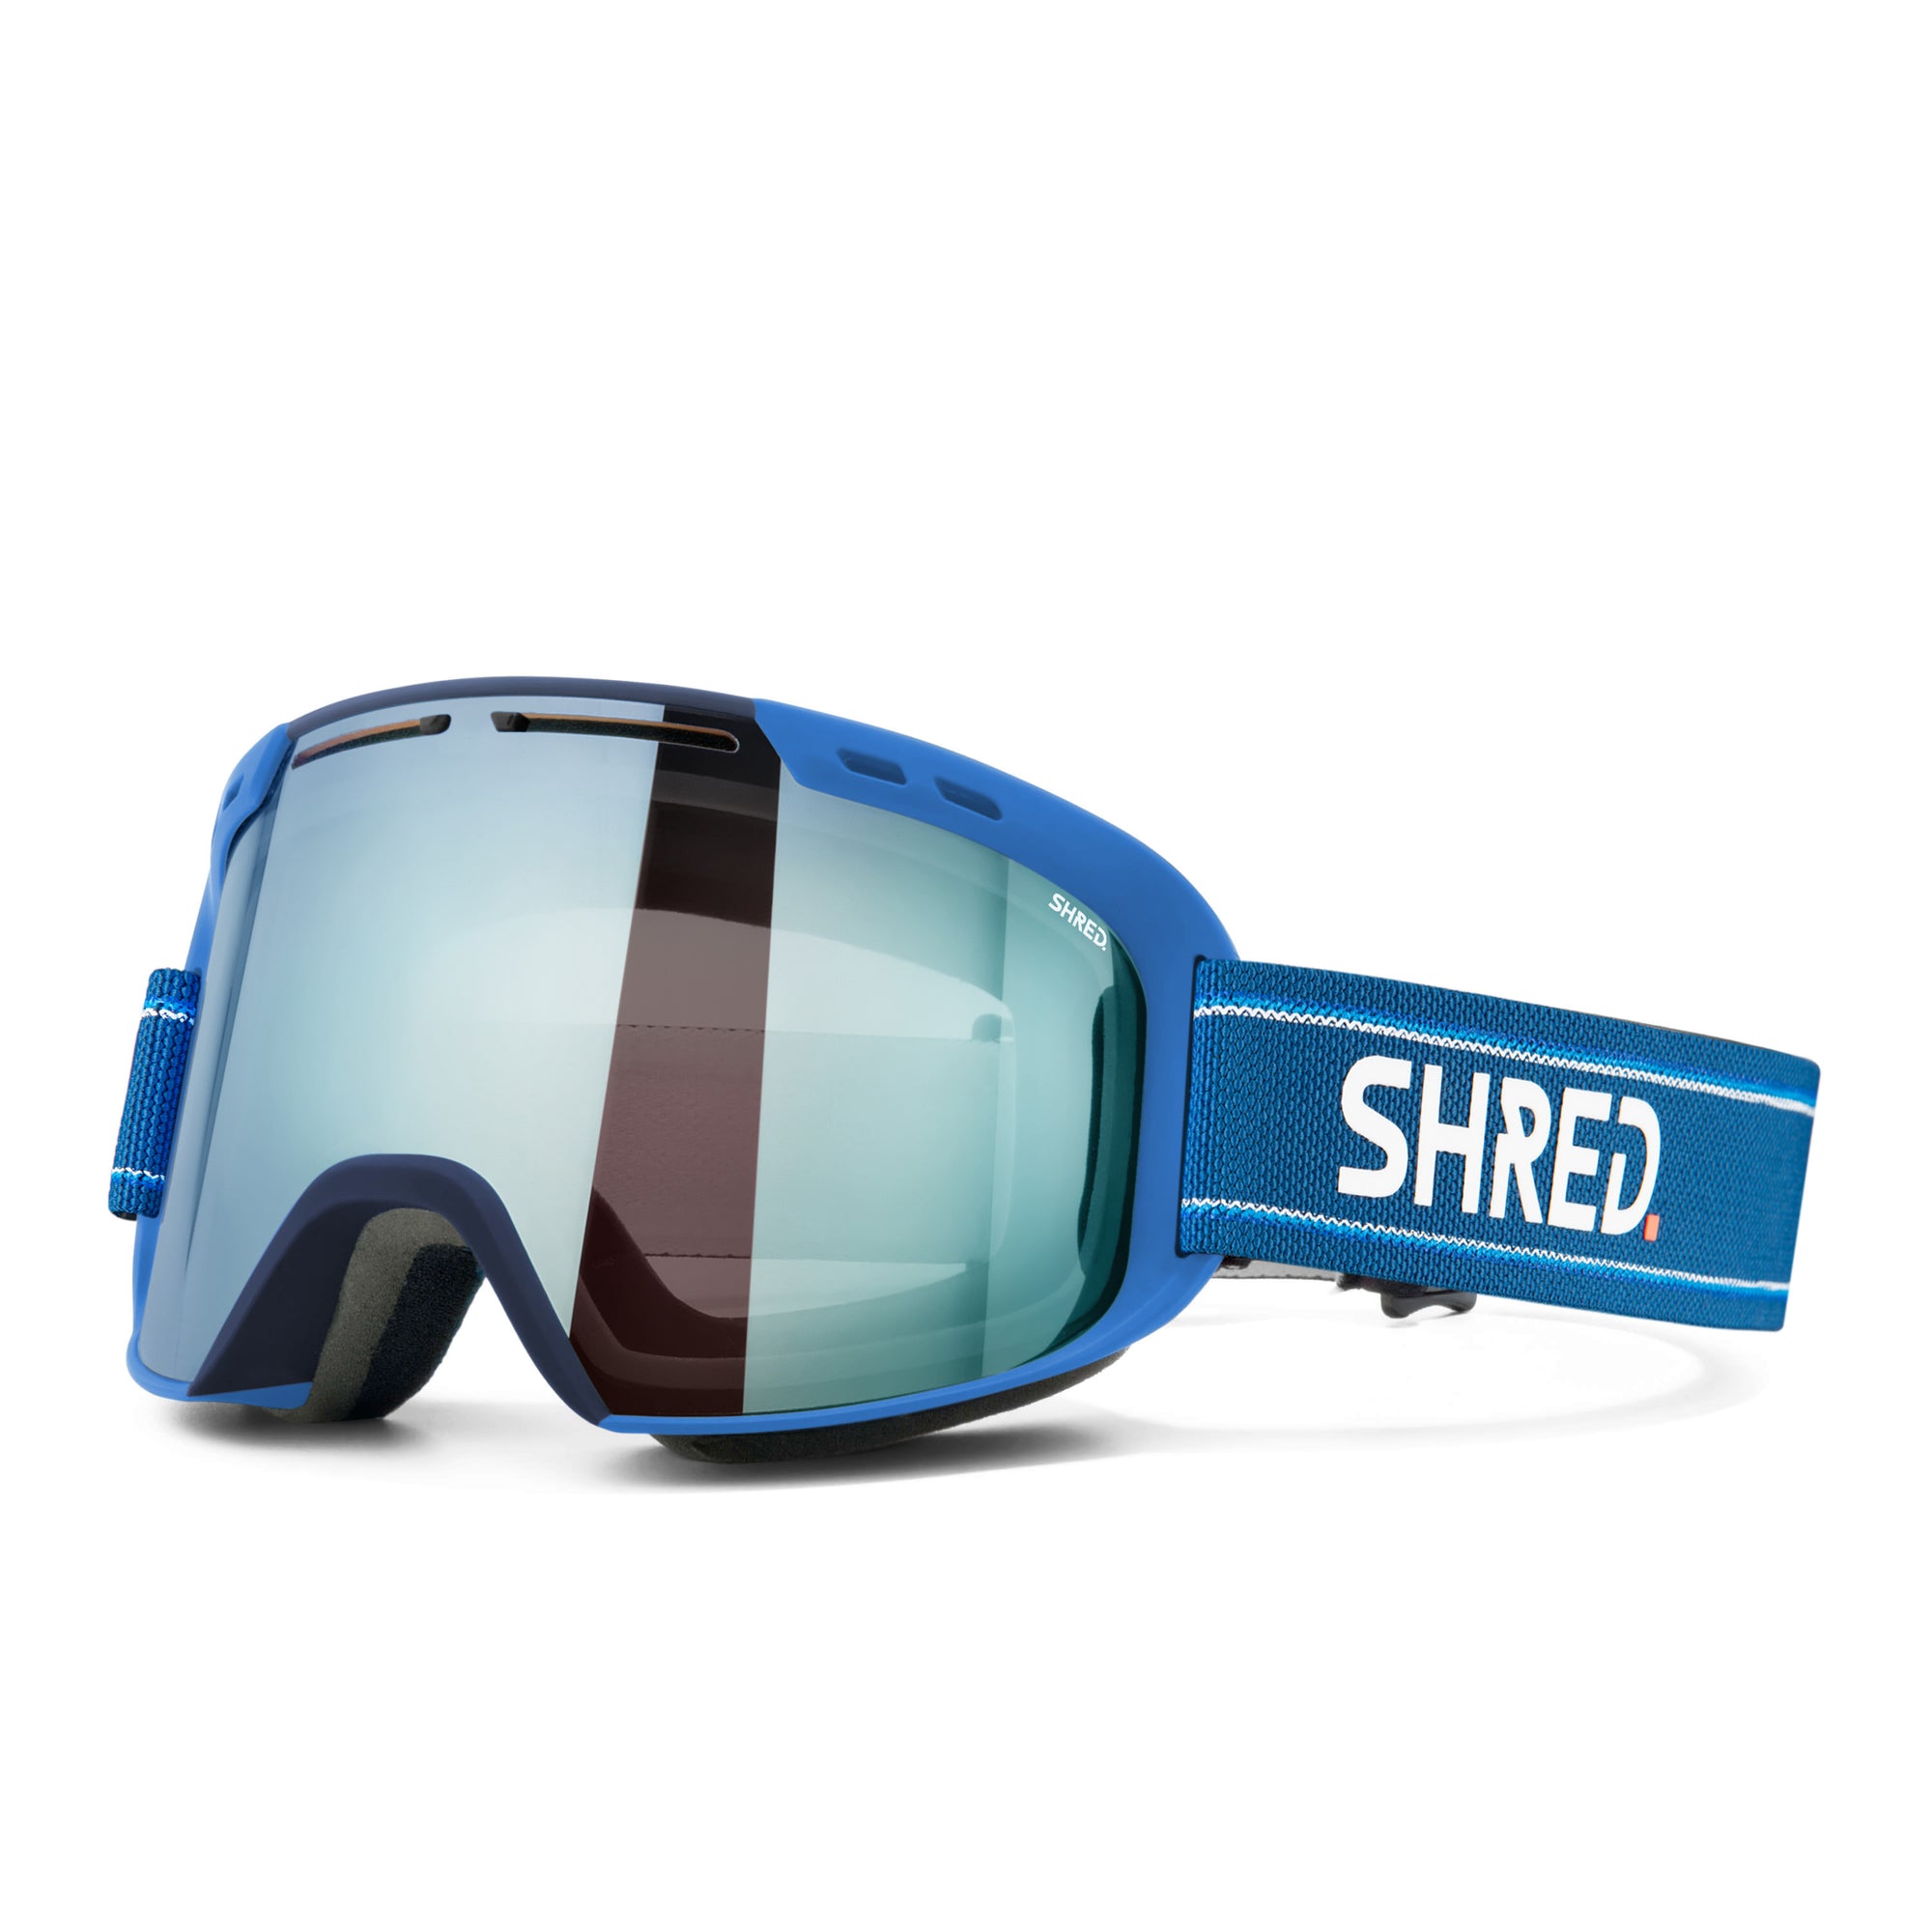 Amazify - Ski Goggles|GOAMAM32A